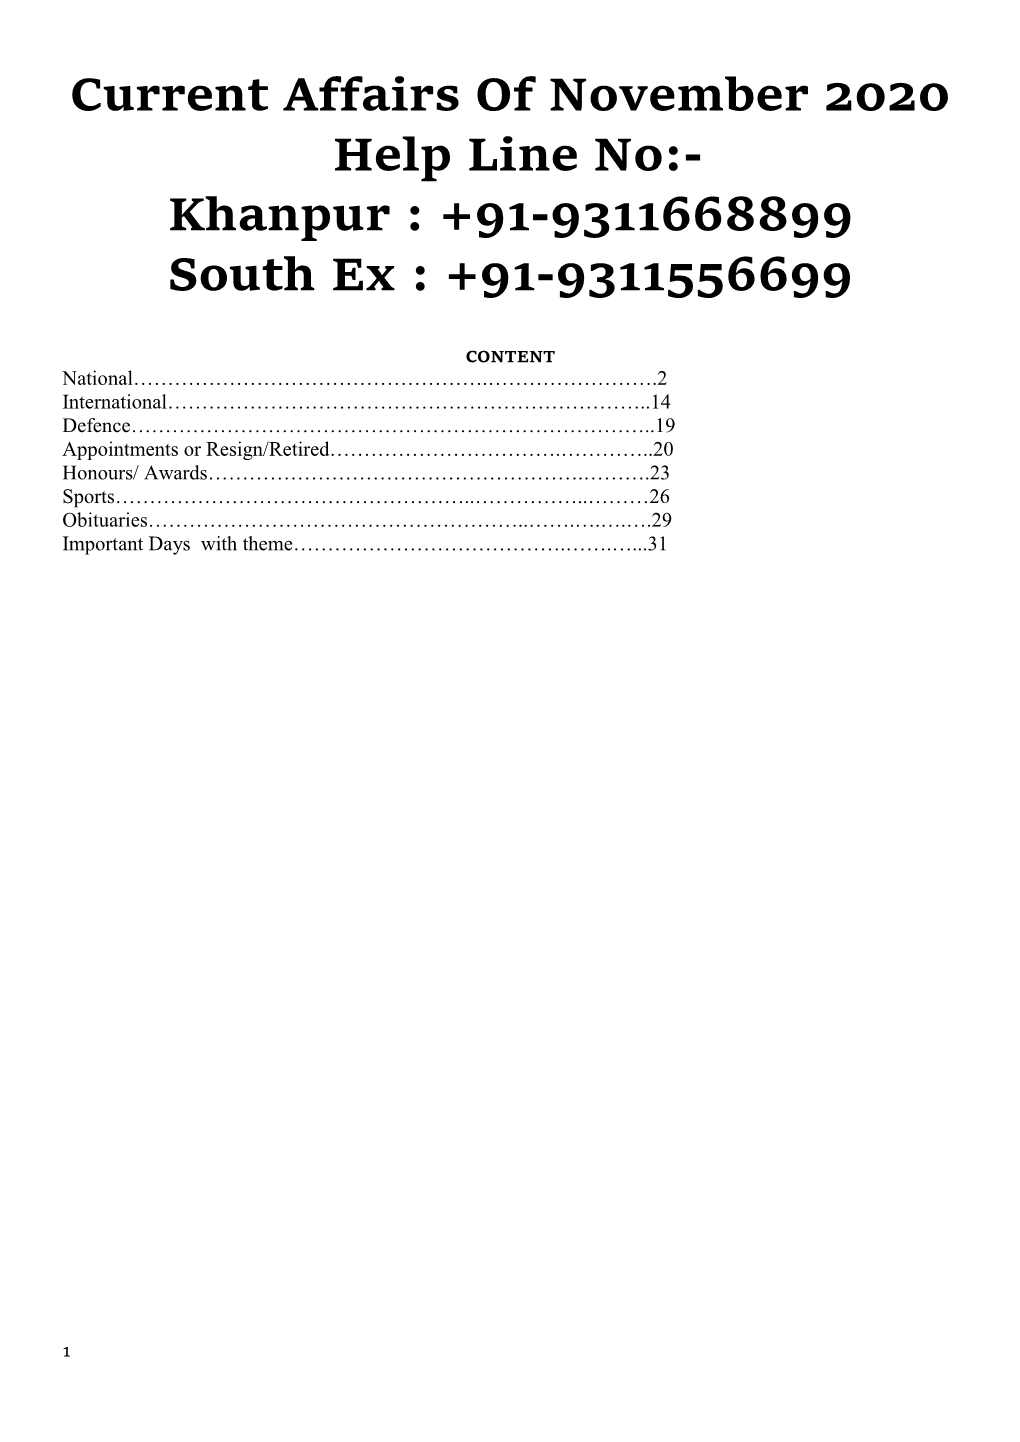 Current Affairs of November 2020 Help Line No:- Khanpur : +91-9311668899 South Ex : +91-9311556699